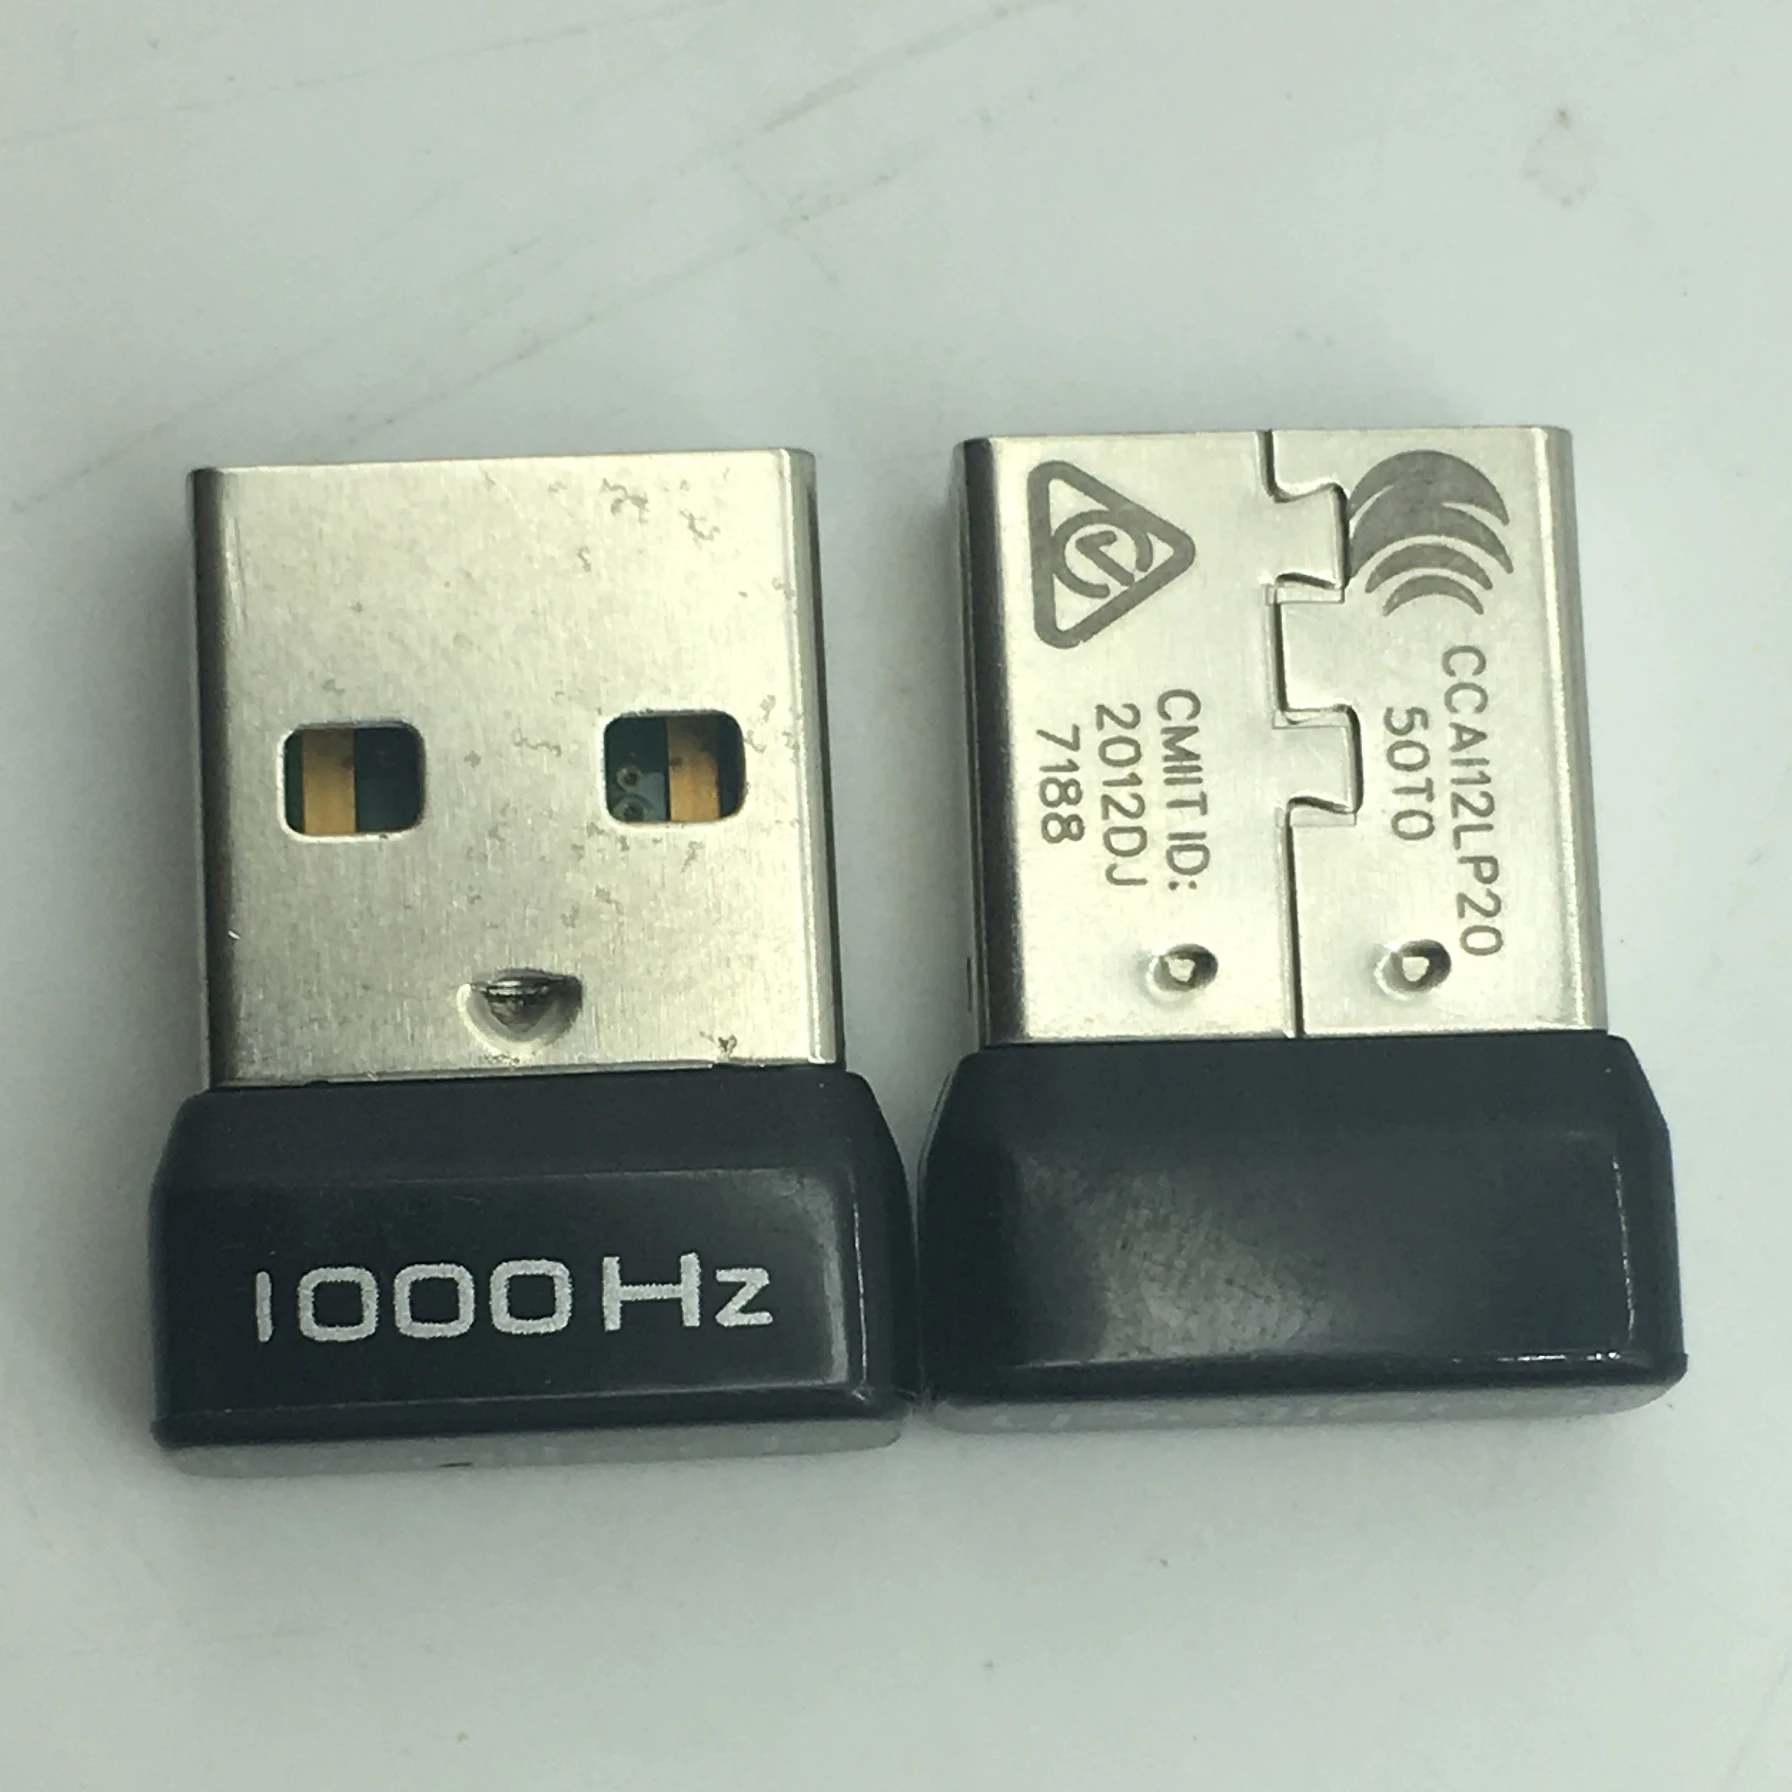 NEW ORIGINAL Logitech G700 G700s RECEIVER GAMING MOUSE WIRELESS Nano USB ADAPTER